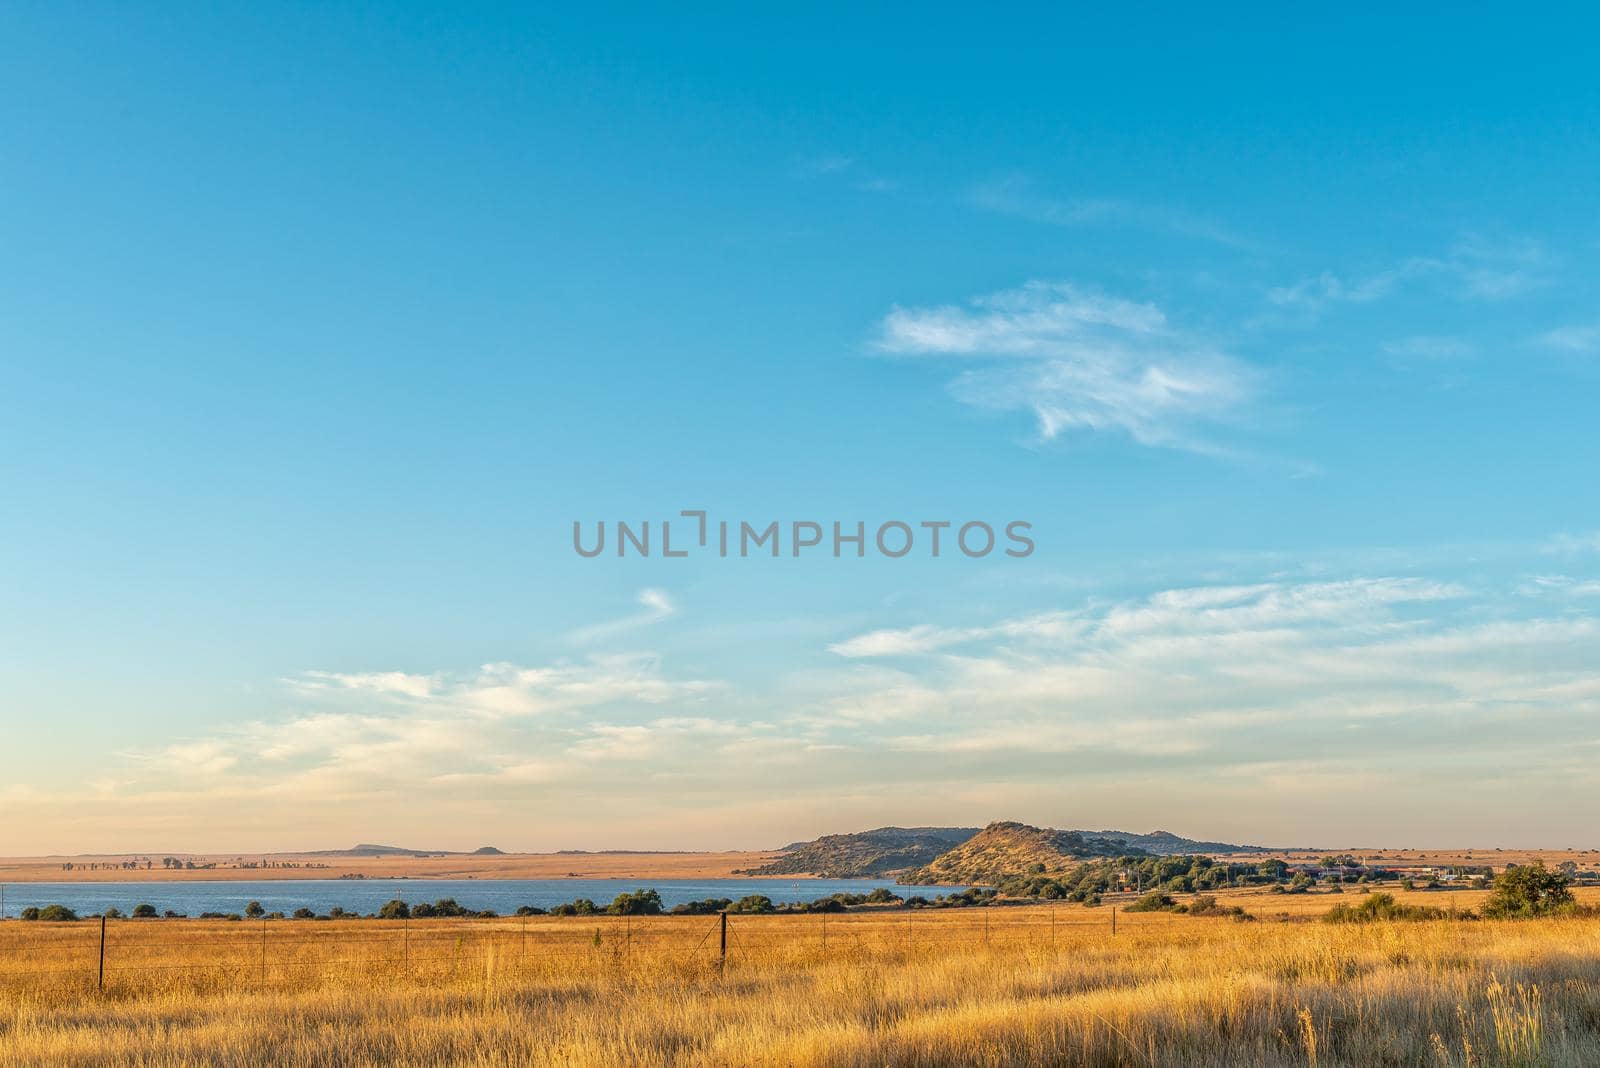 Early morning view of Tierpoort Dam near Bloemfontein by dpreezg